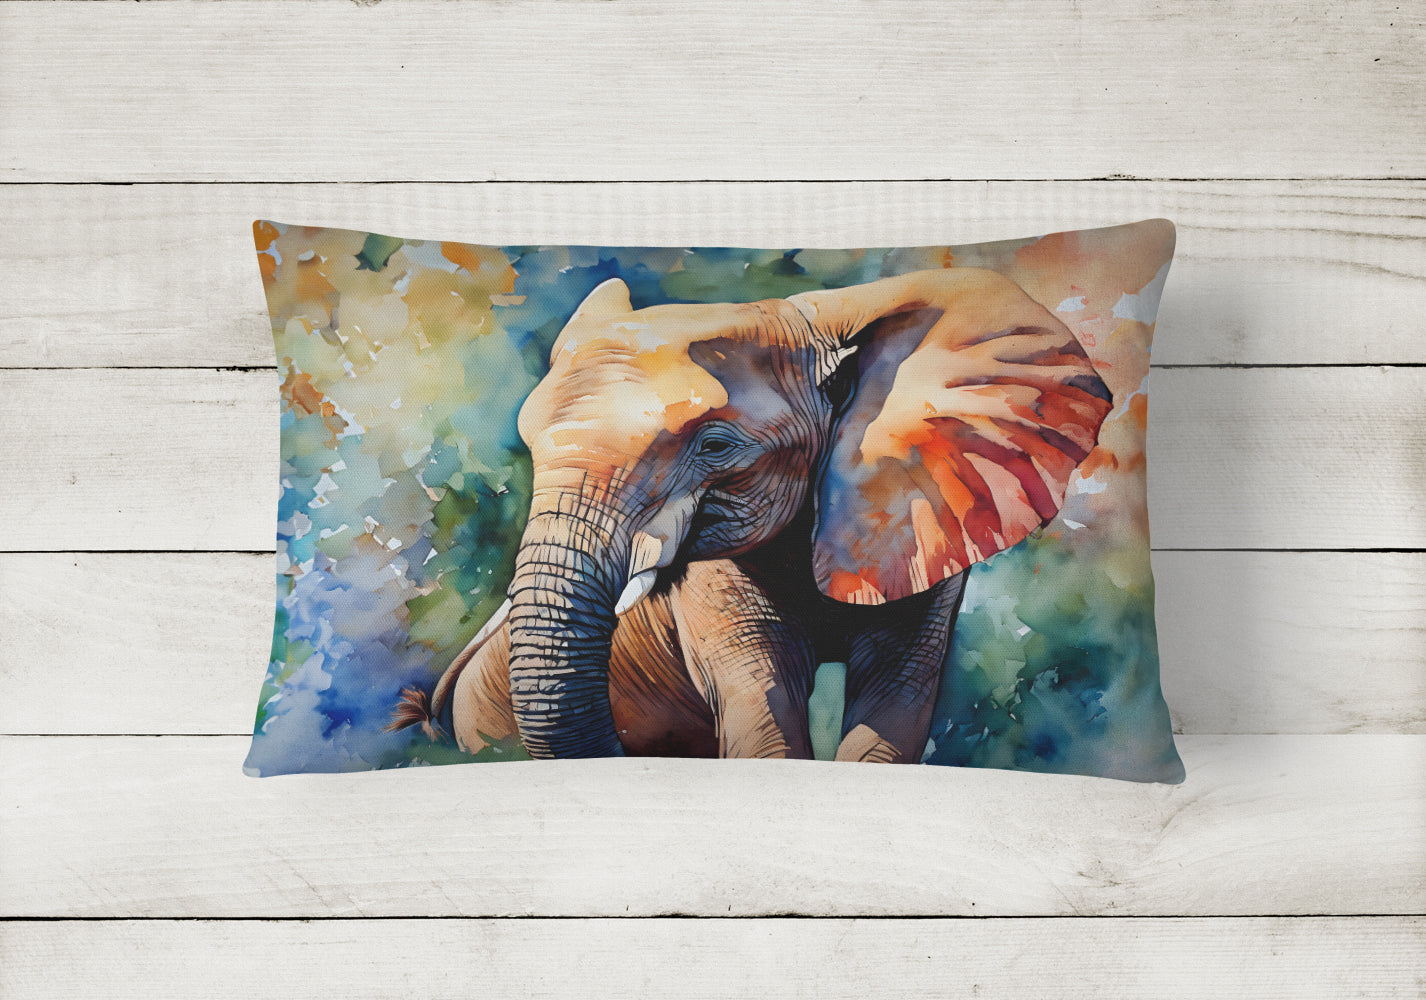 Buy this Elephant Throw Pillow